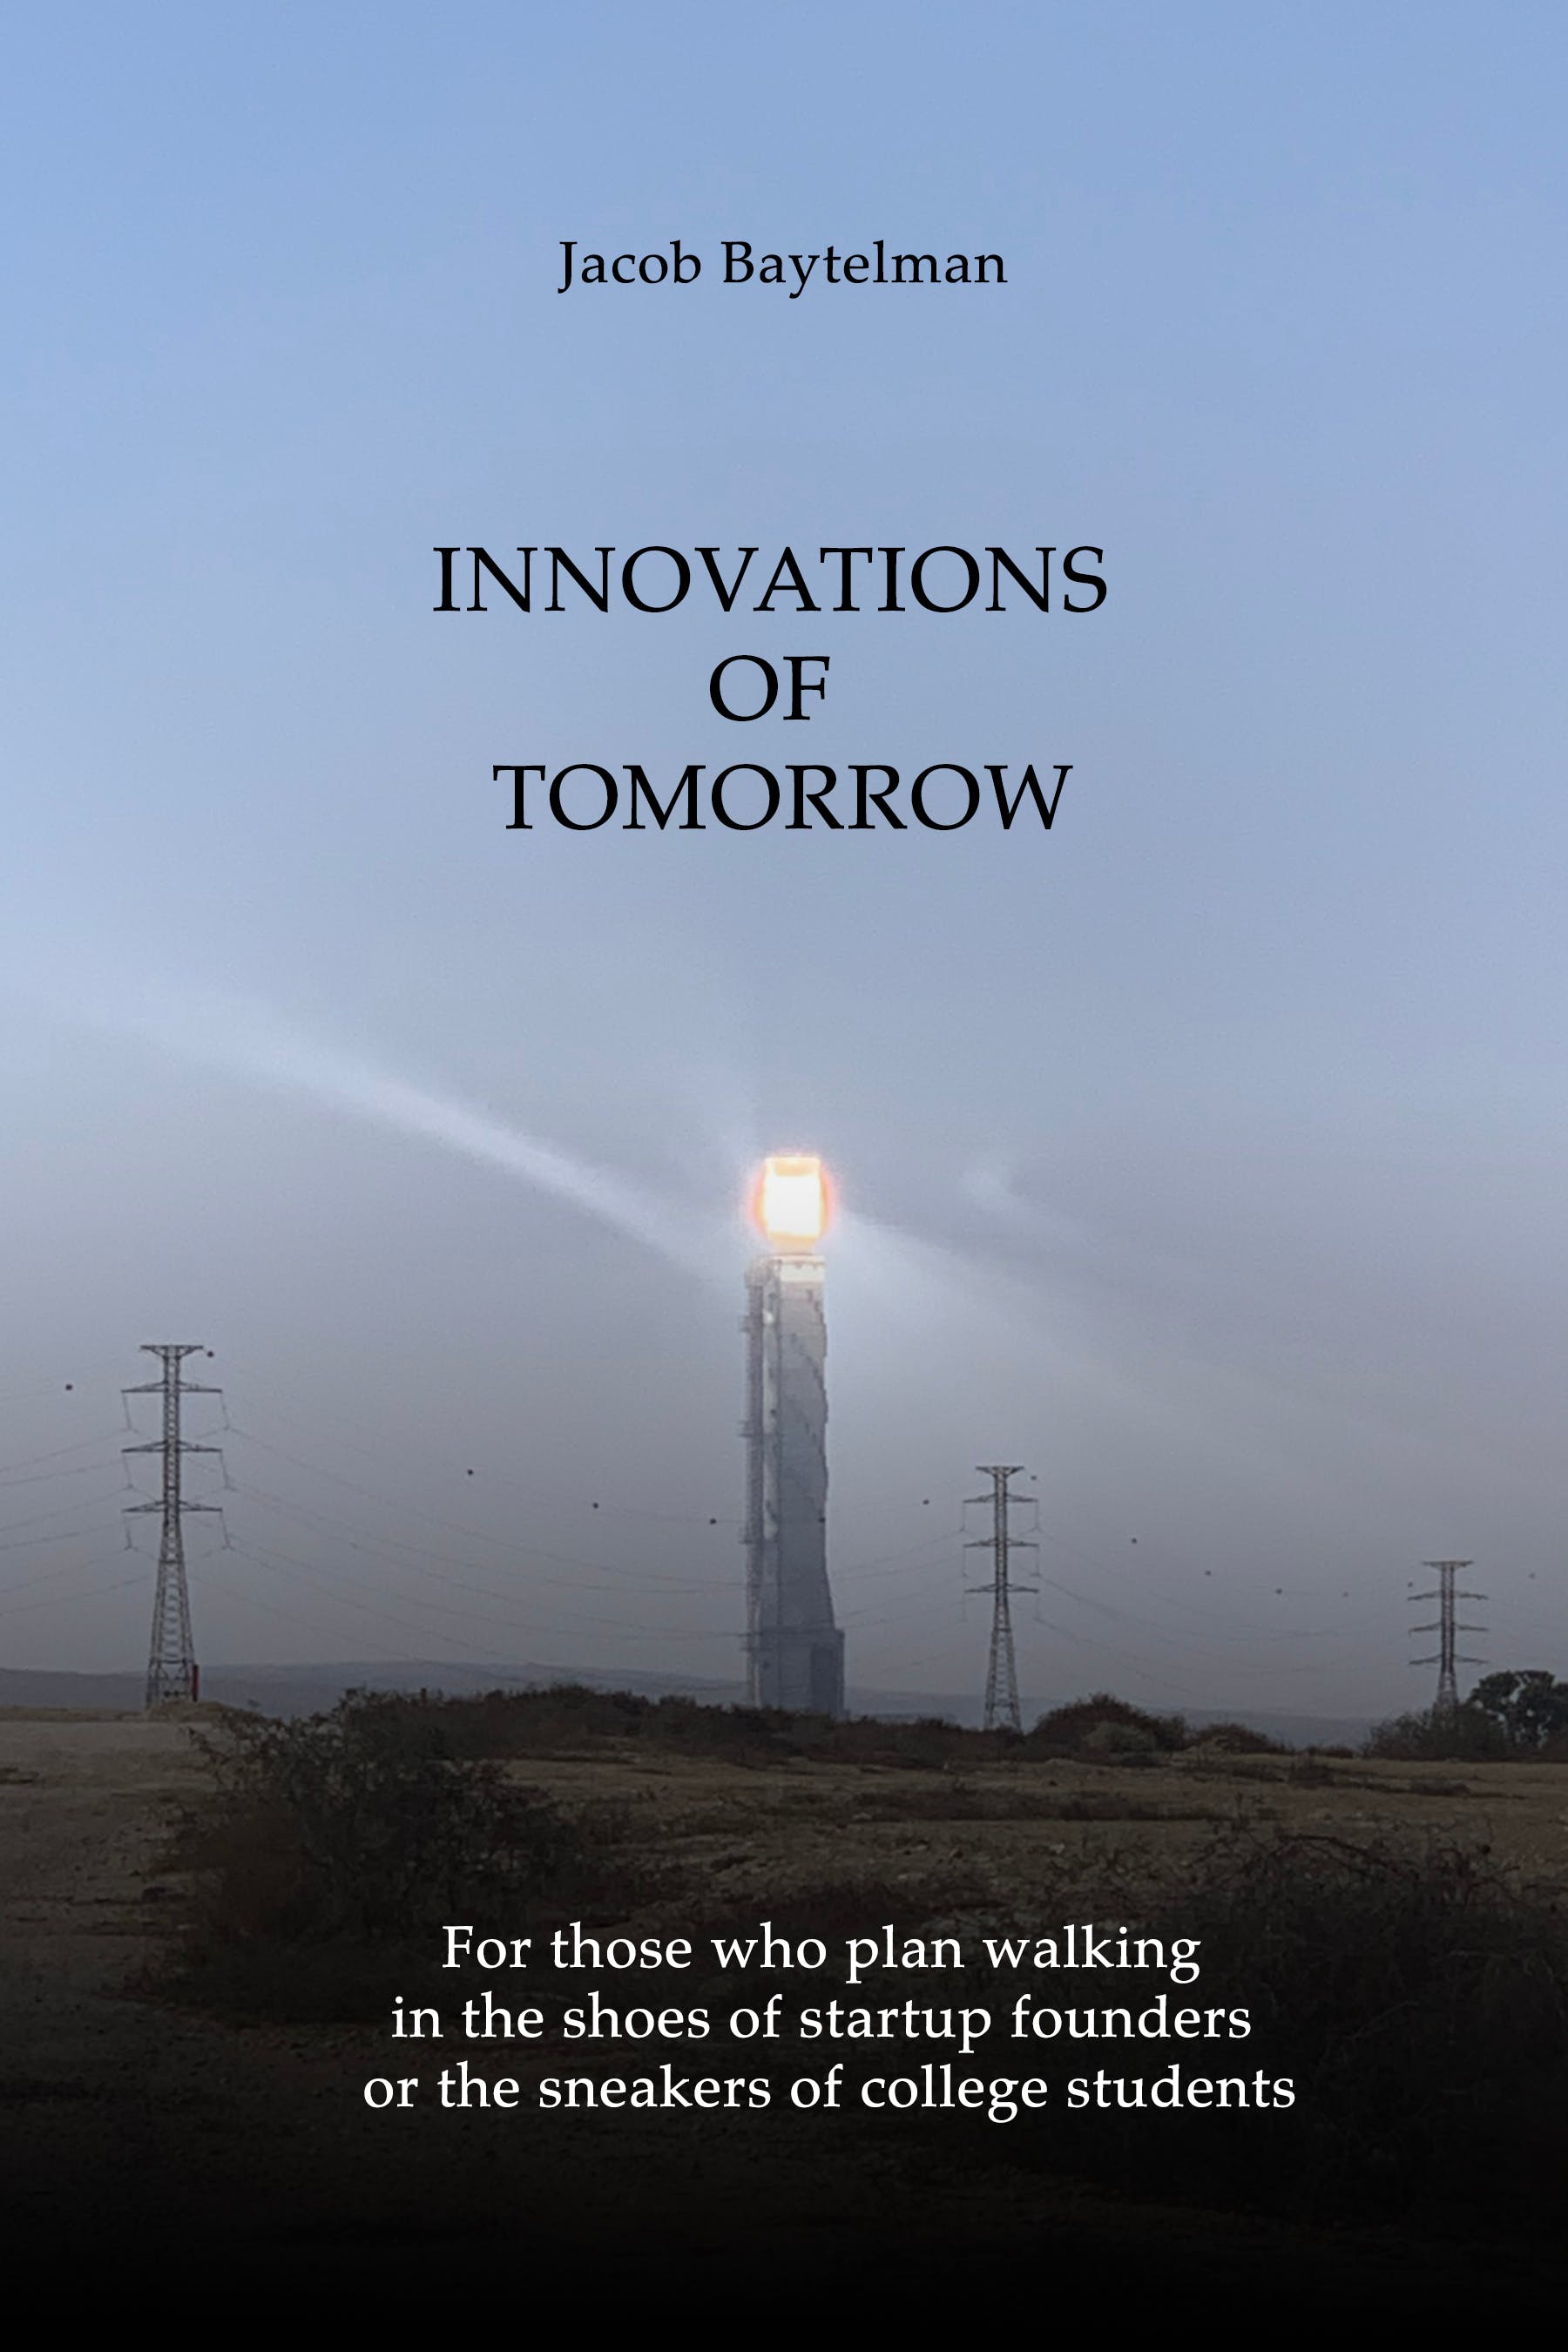 A book: Innovations of Tomorrow media 1